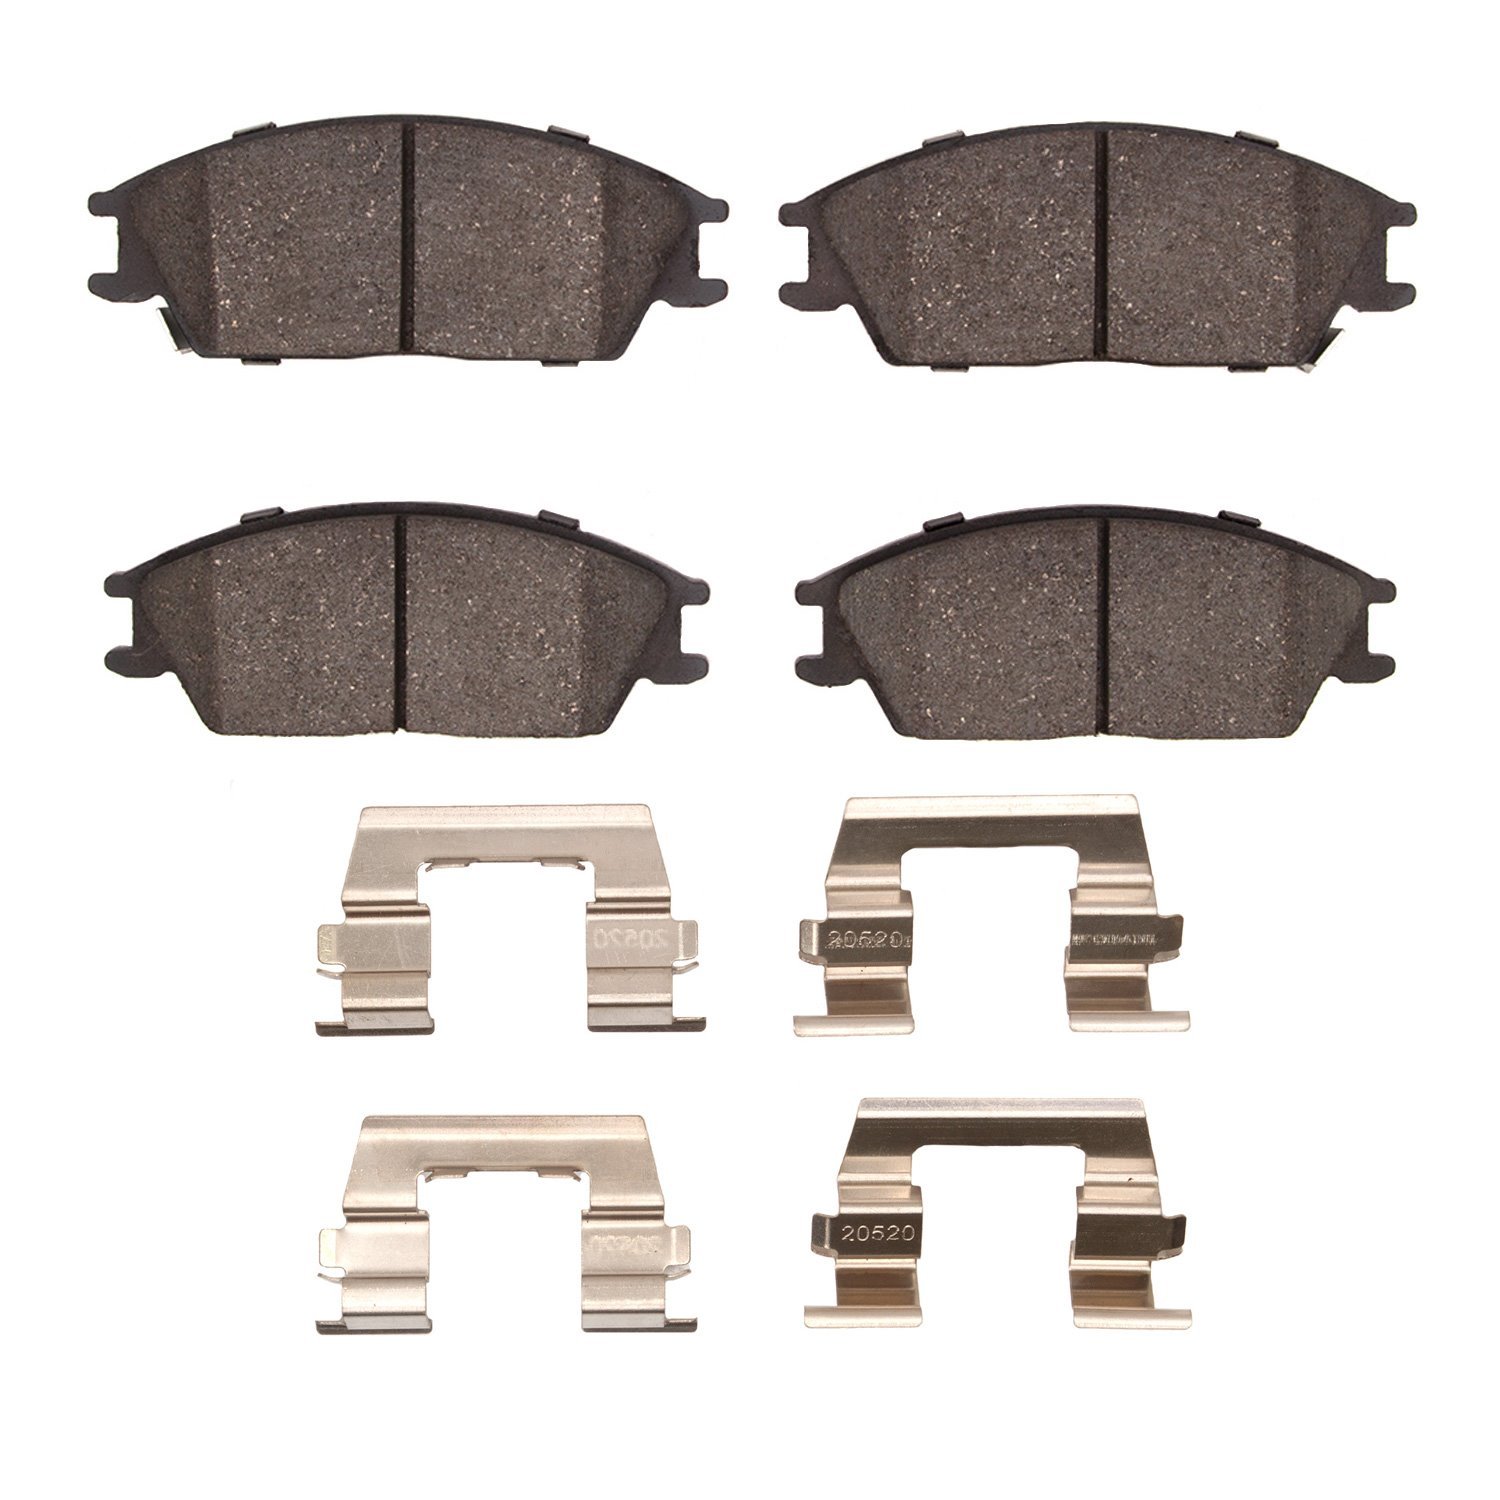 1310-0440-01 3000-Series Ceramic Brake Pads & Hardware Kit, 1987-2006 Multiple Makes/Models, Position: Front